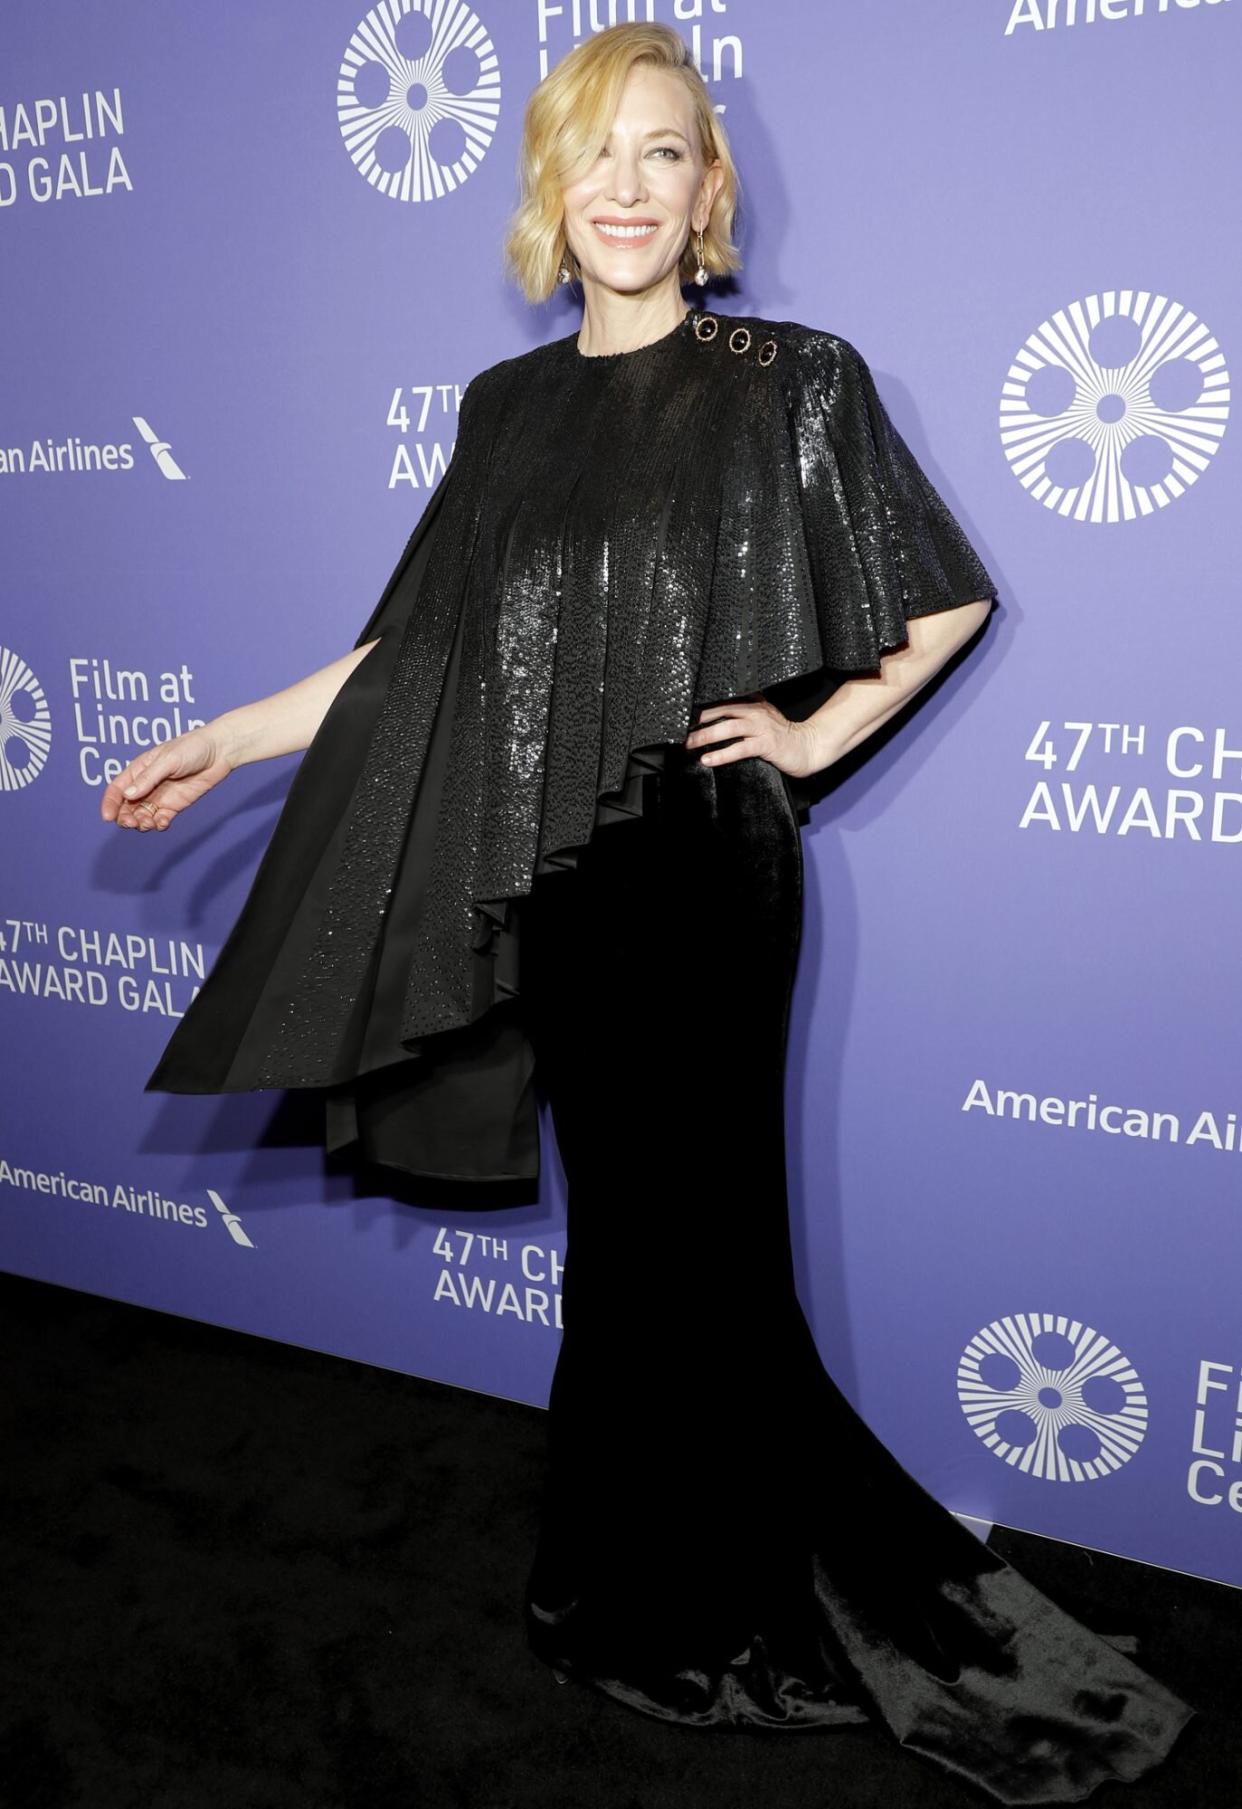 Cate Blanchett attends the 47th Chaplin Award Gala honoring Cate Blanchett